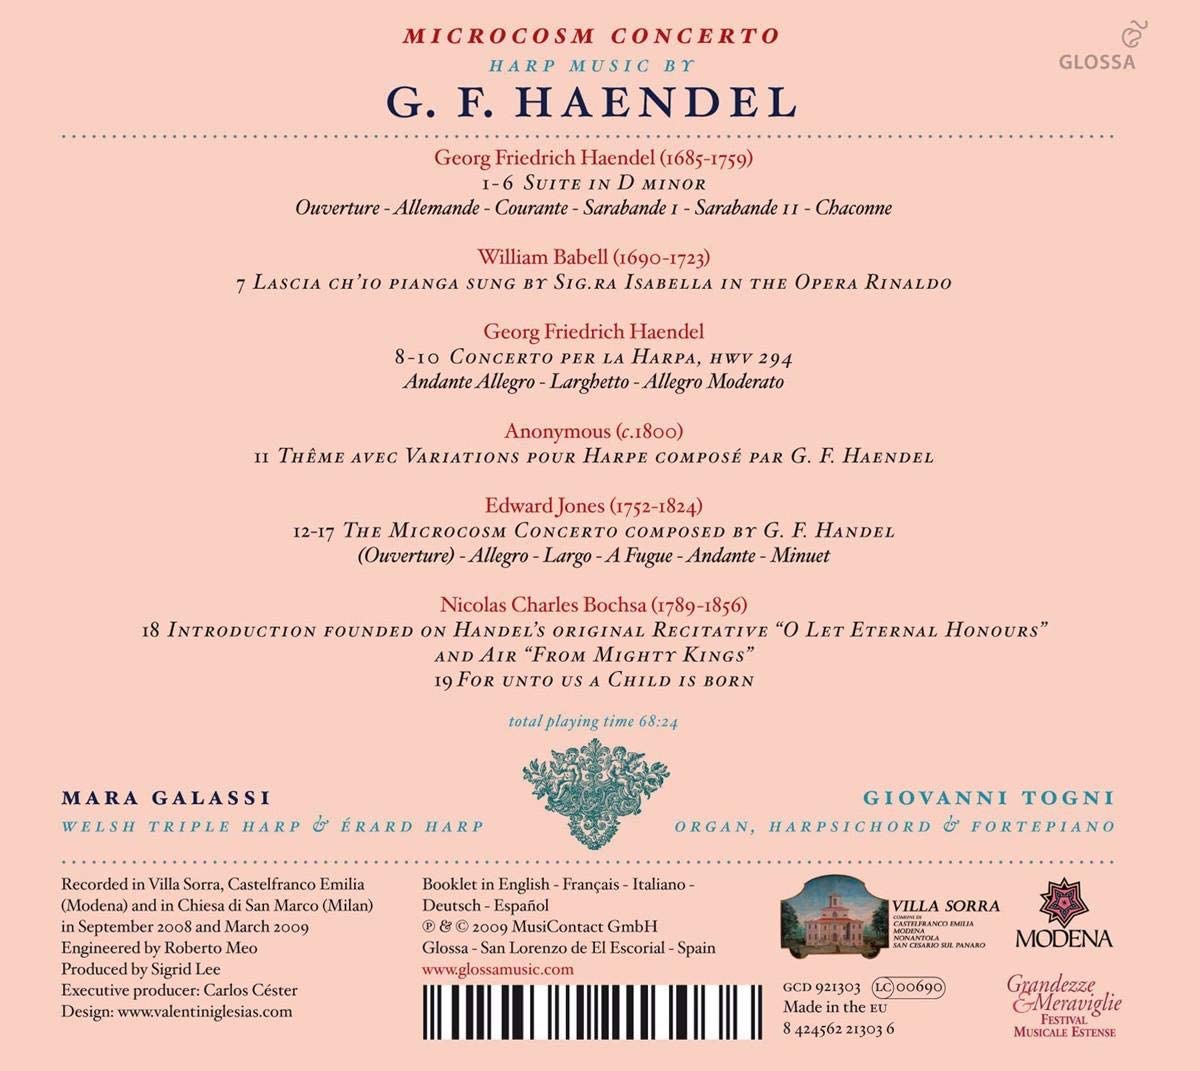 Microcosm Concerto, Harp music by Handel - slide-1